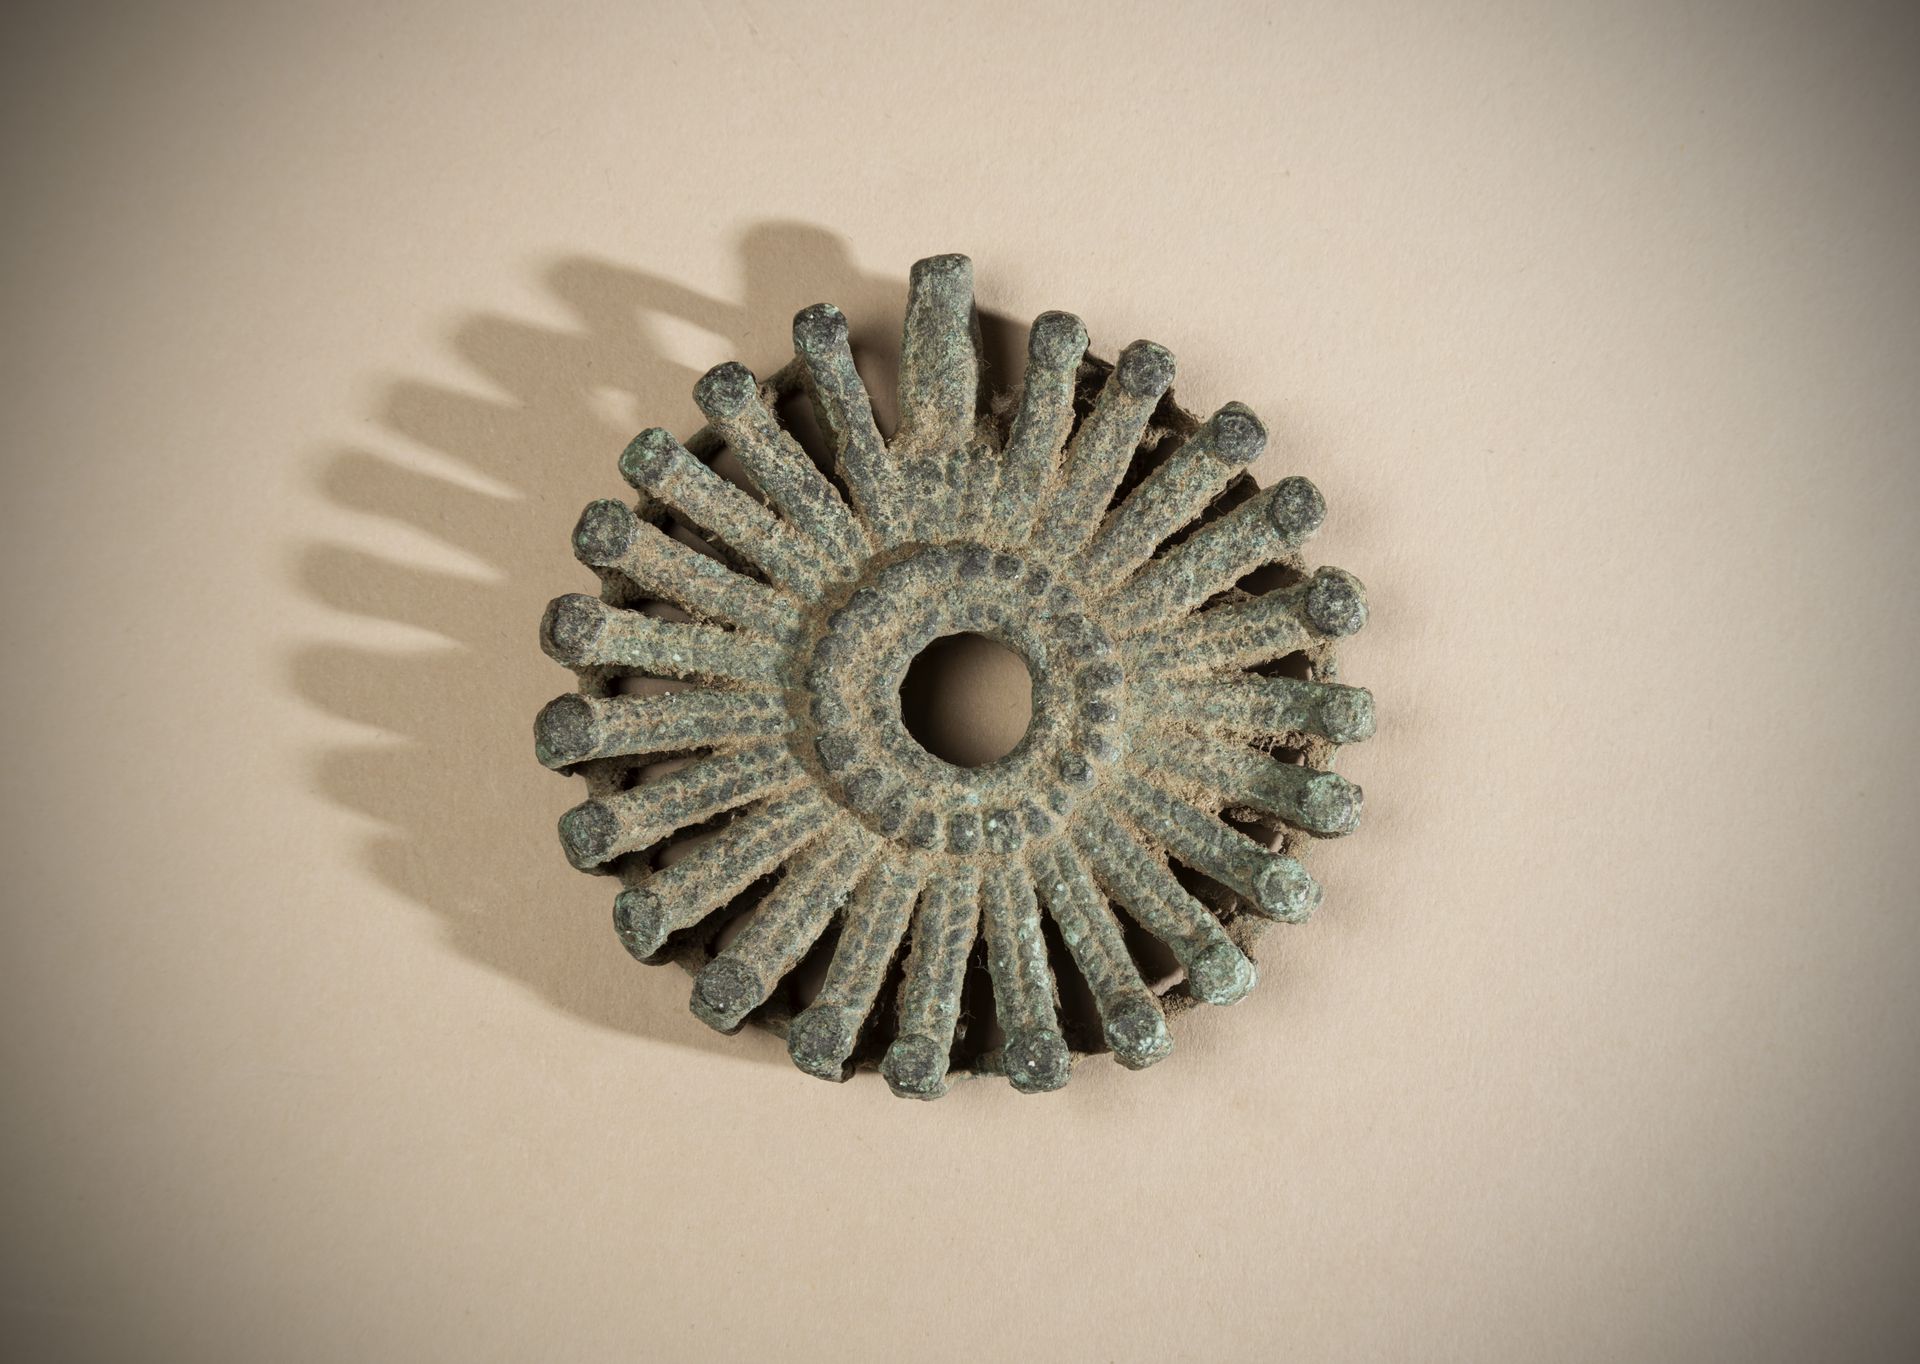 Null DOGON (马里)

太阳 "吊坠，失蜡青铜，挖掘出的铜锈

前阿兰-普罗沃特收藏

直径：8厘米